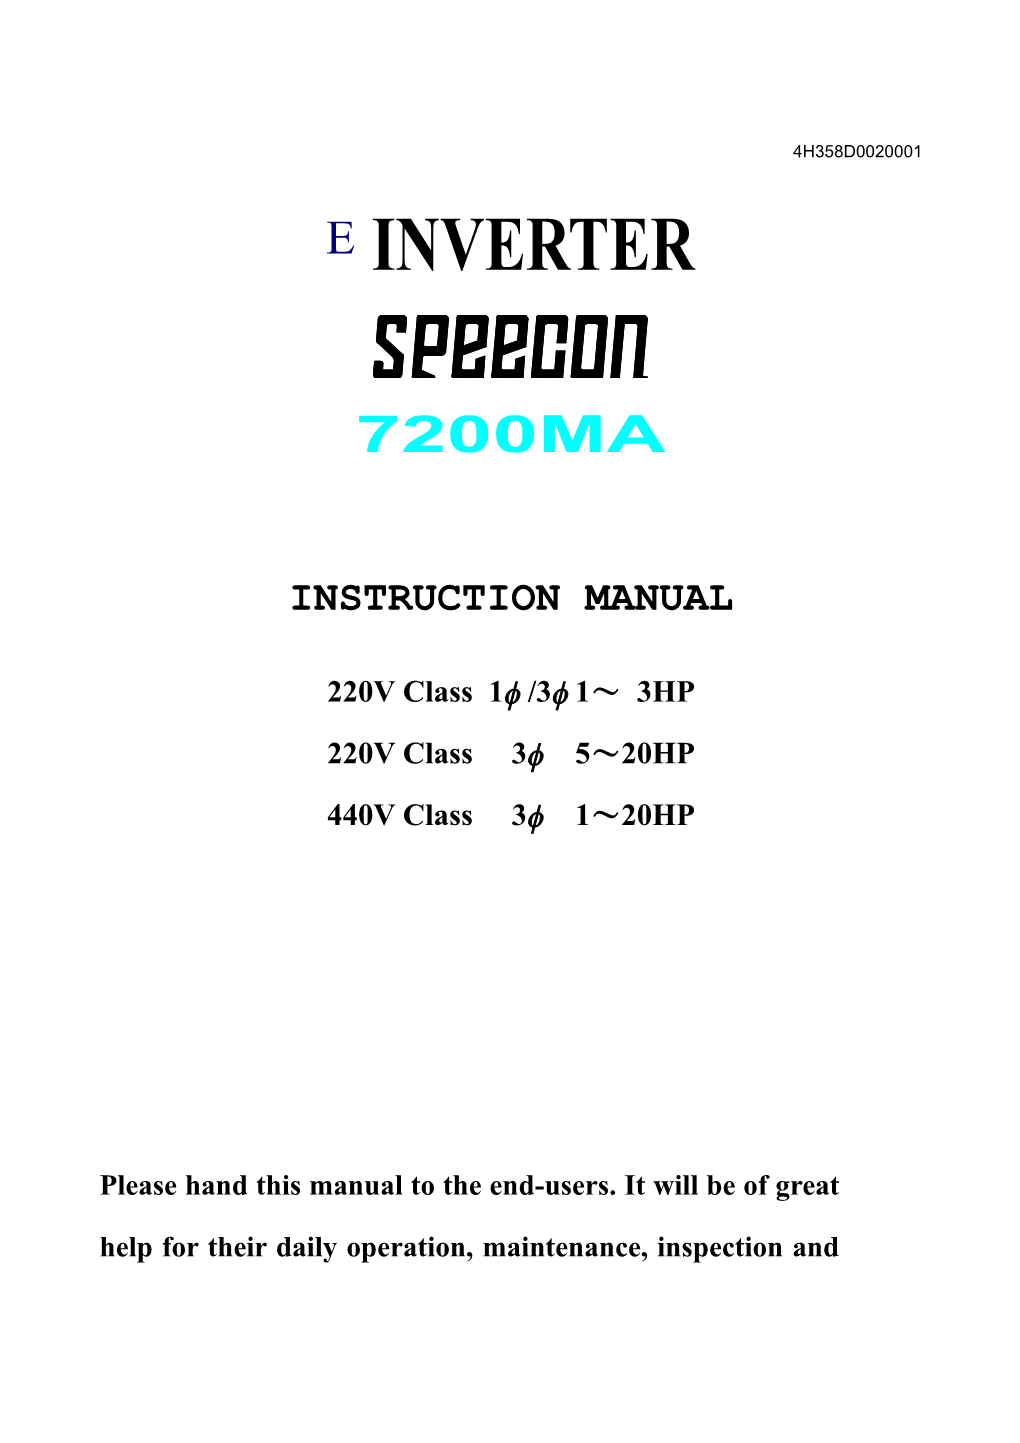 Instruction Manual s3